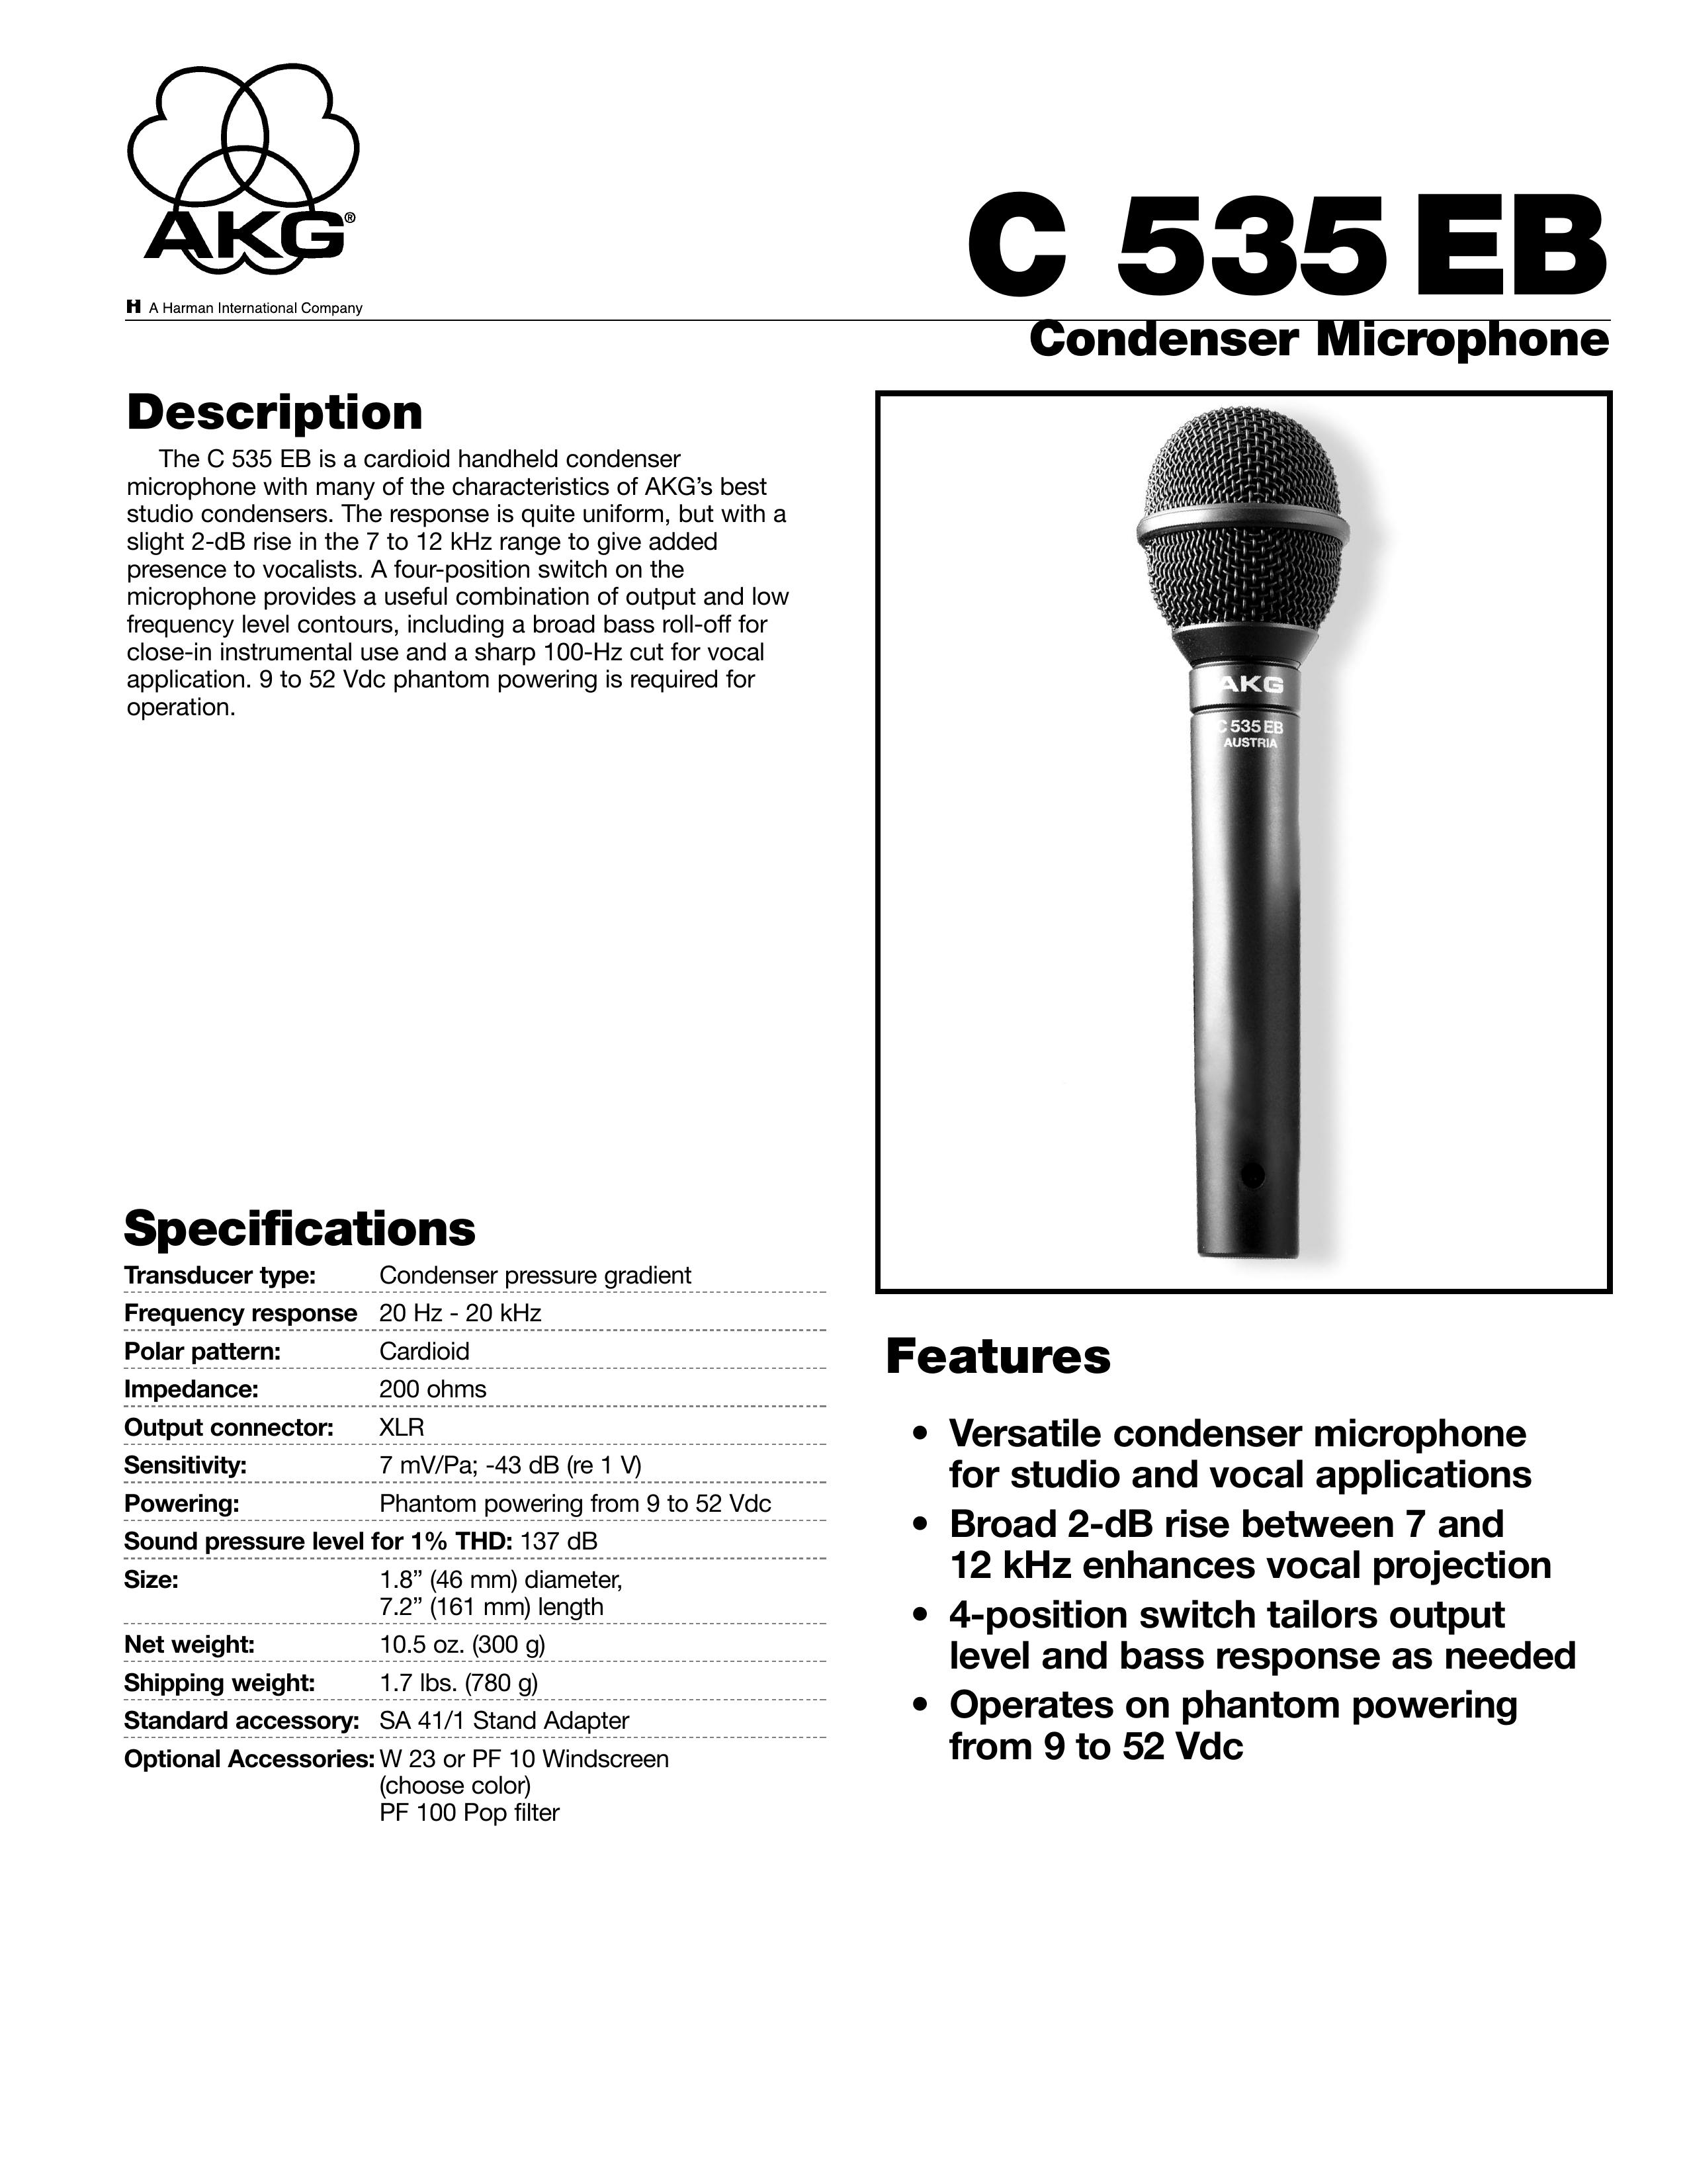 AKG Acoustics C 535 EB Microphone User Manual